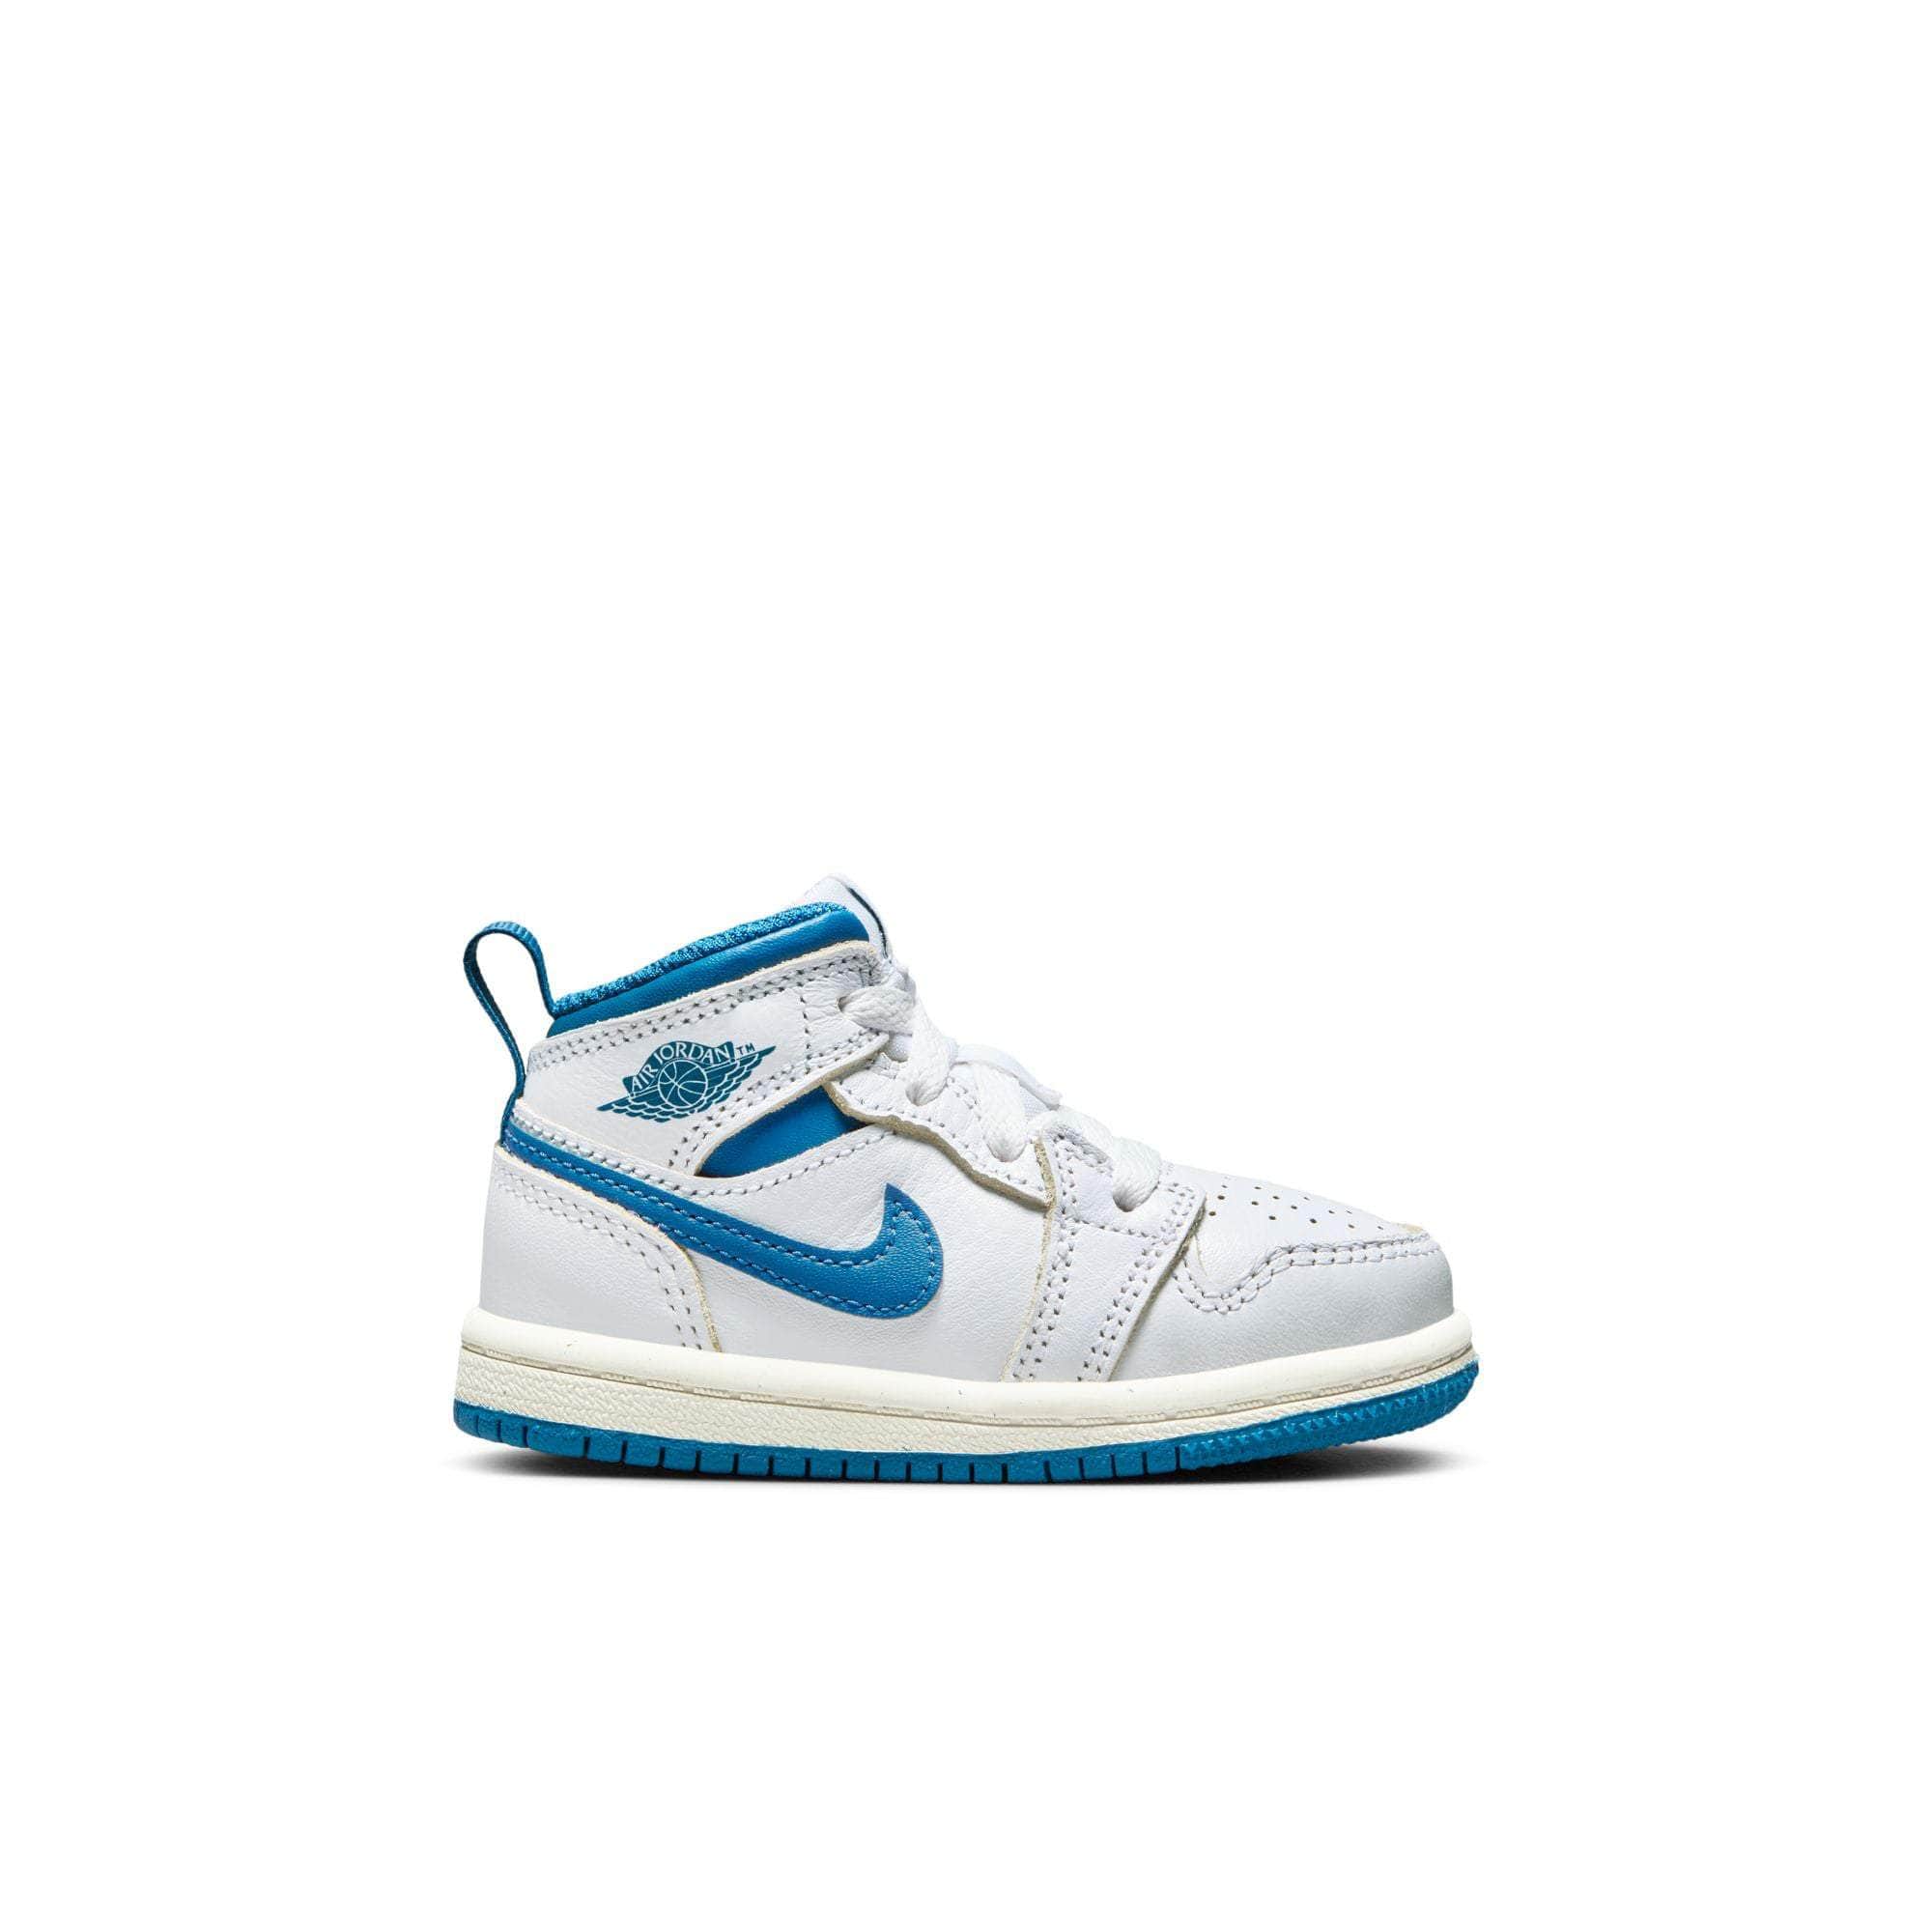 Air Jordan Footwear Air Jordan 1 Mid SE "Industrial Blue" - Toddler's TD